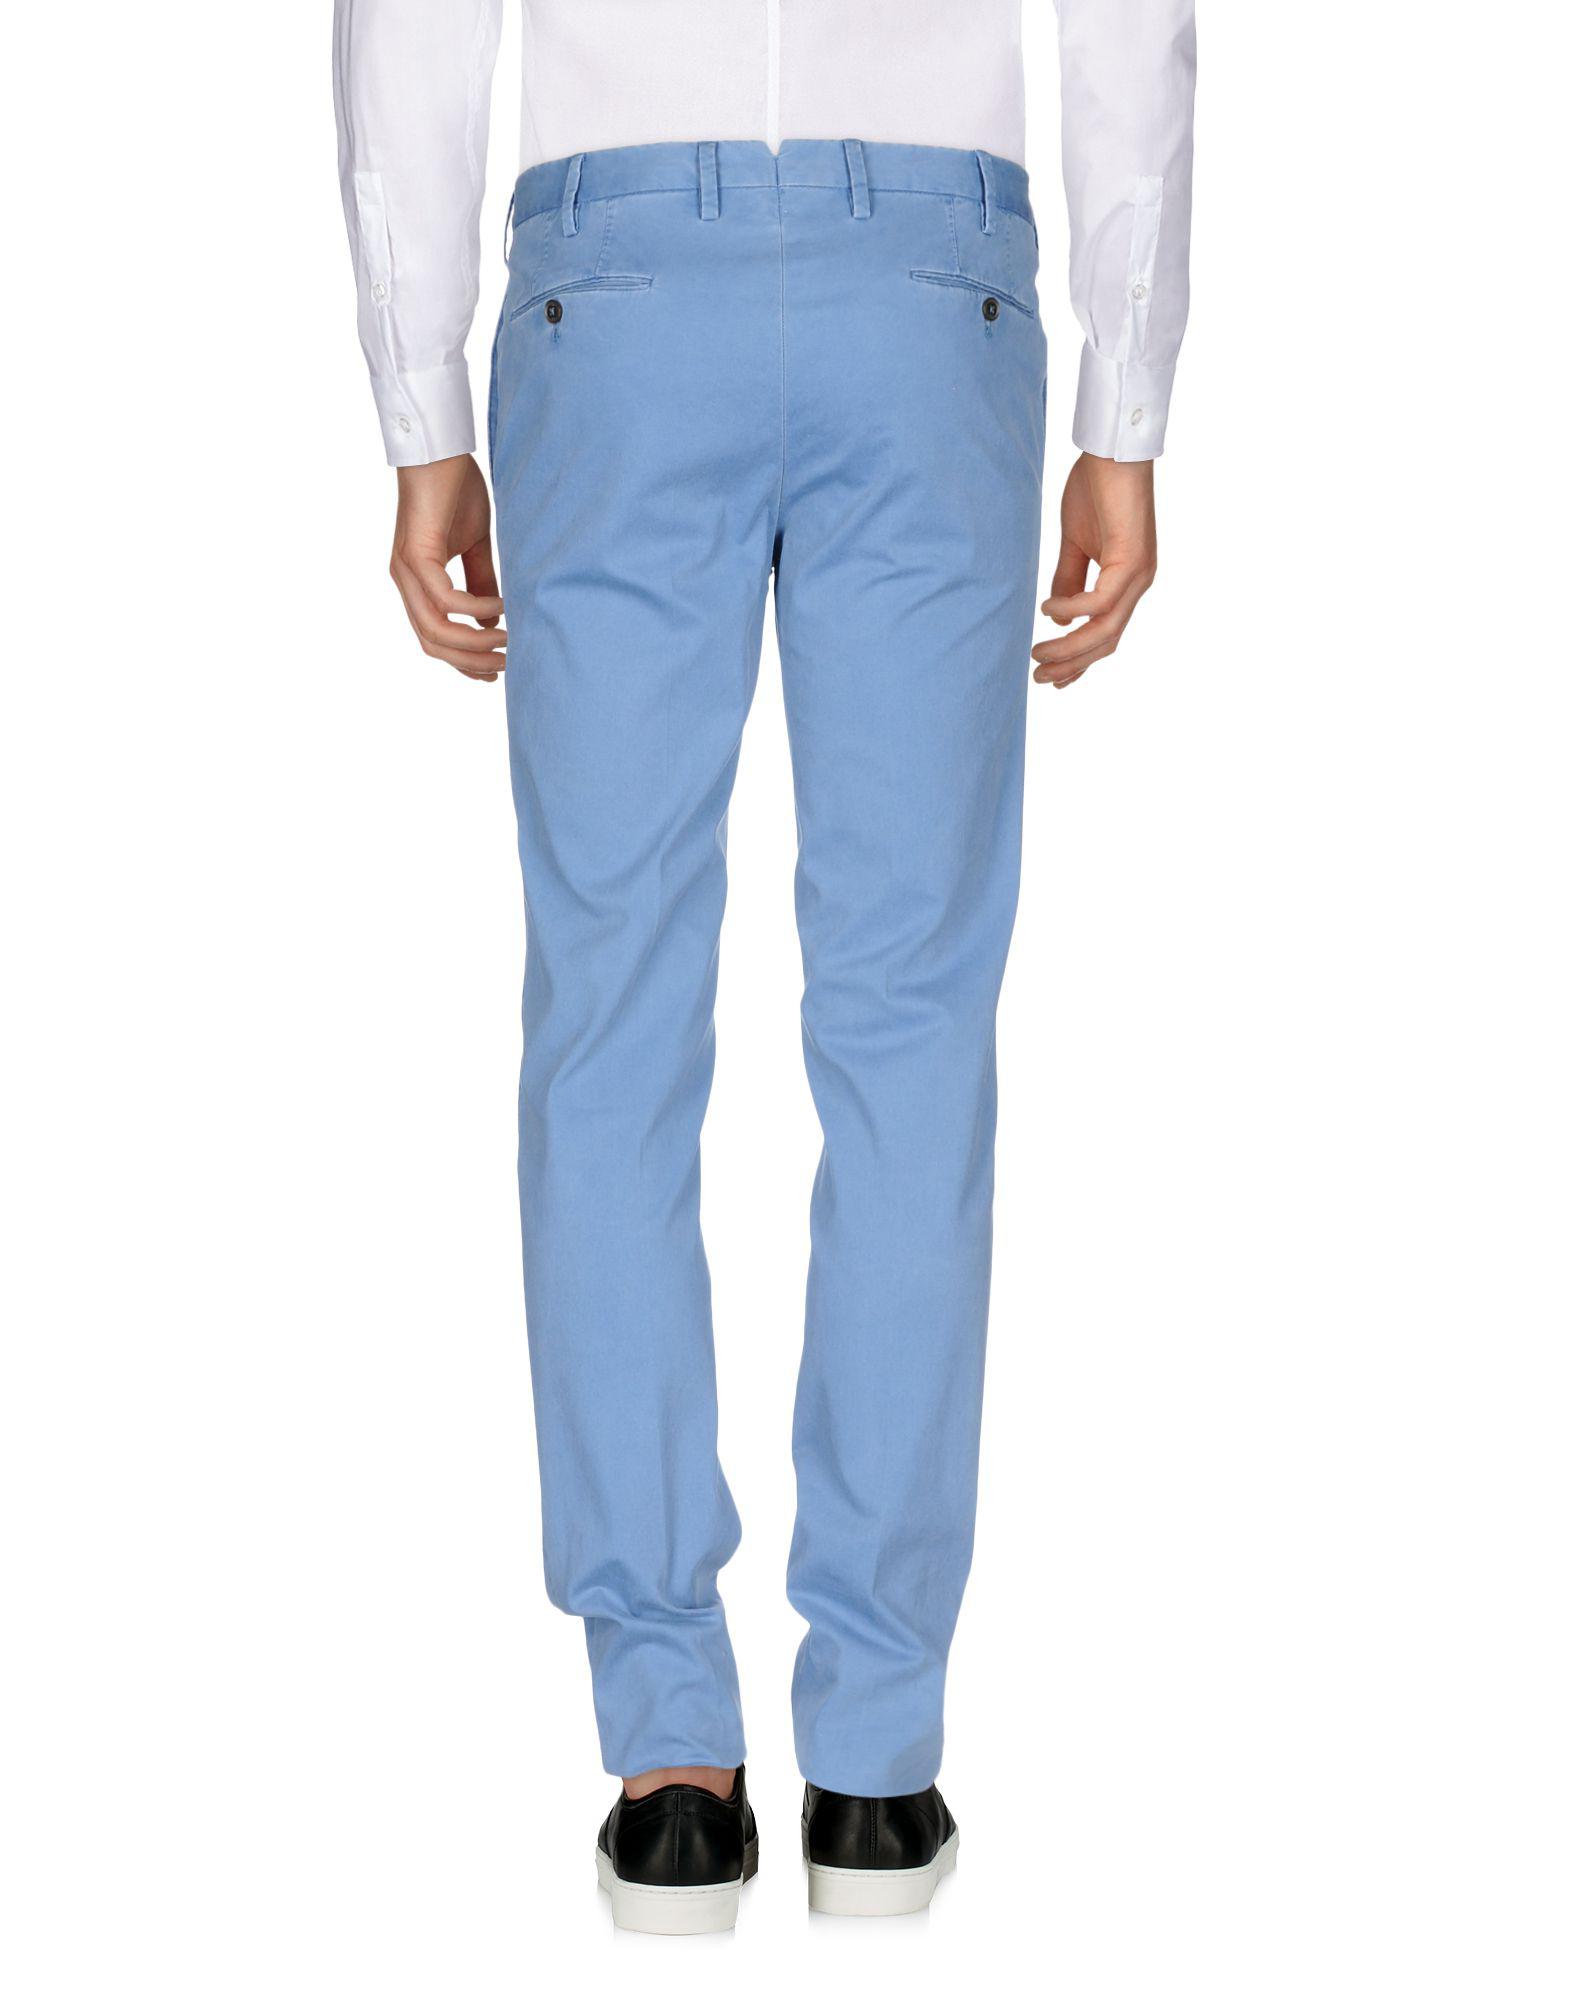 PT01 Cotton Casual Trouser in Sky Blue (Blue) for Men - Lyst